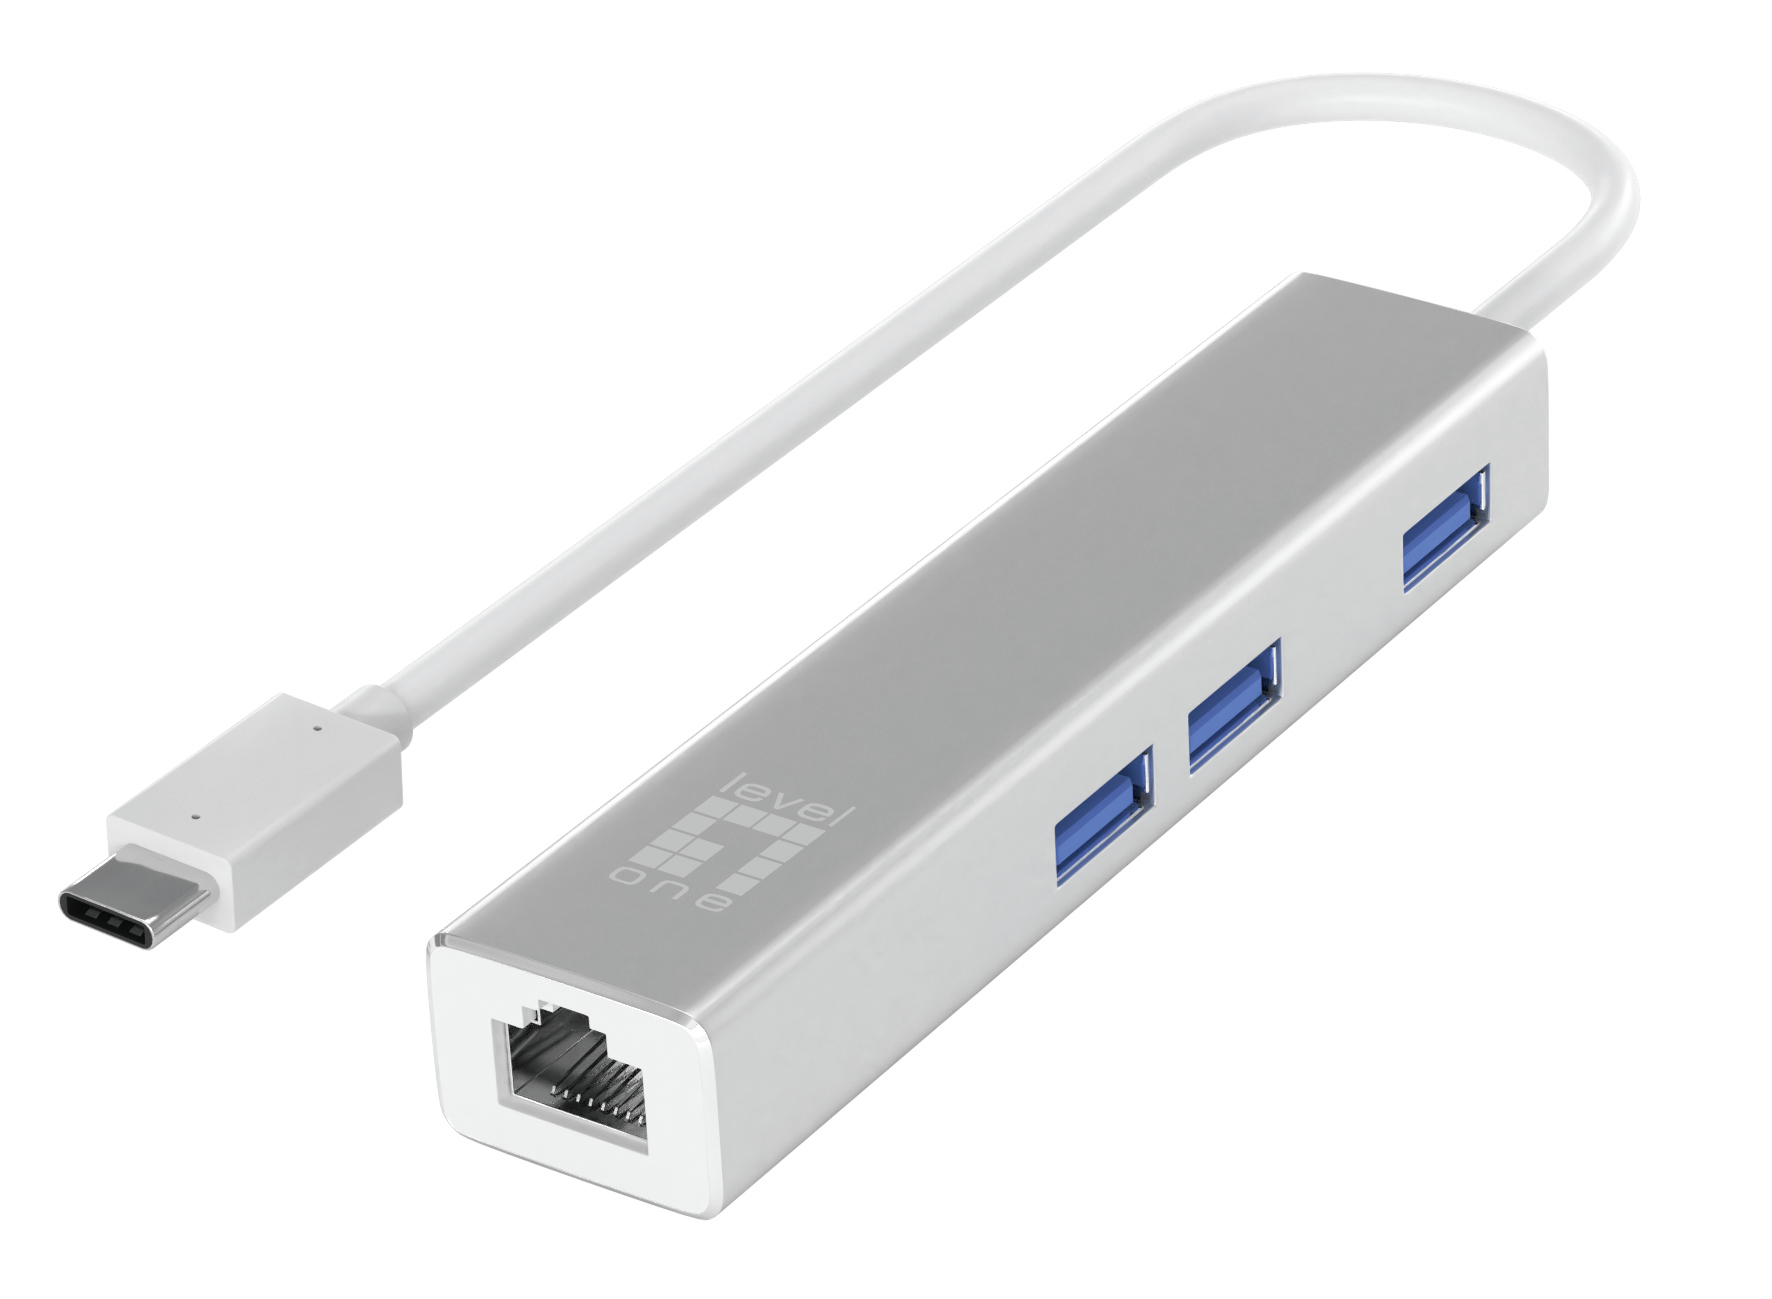 Photos - Cable (video, audio, USB) LevelOne Gigabit USB-C Network Adapter with USB Hub USB-0504 